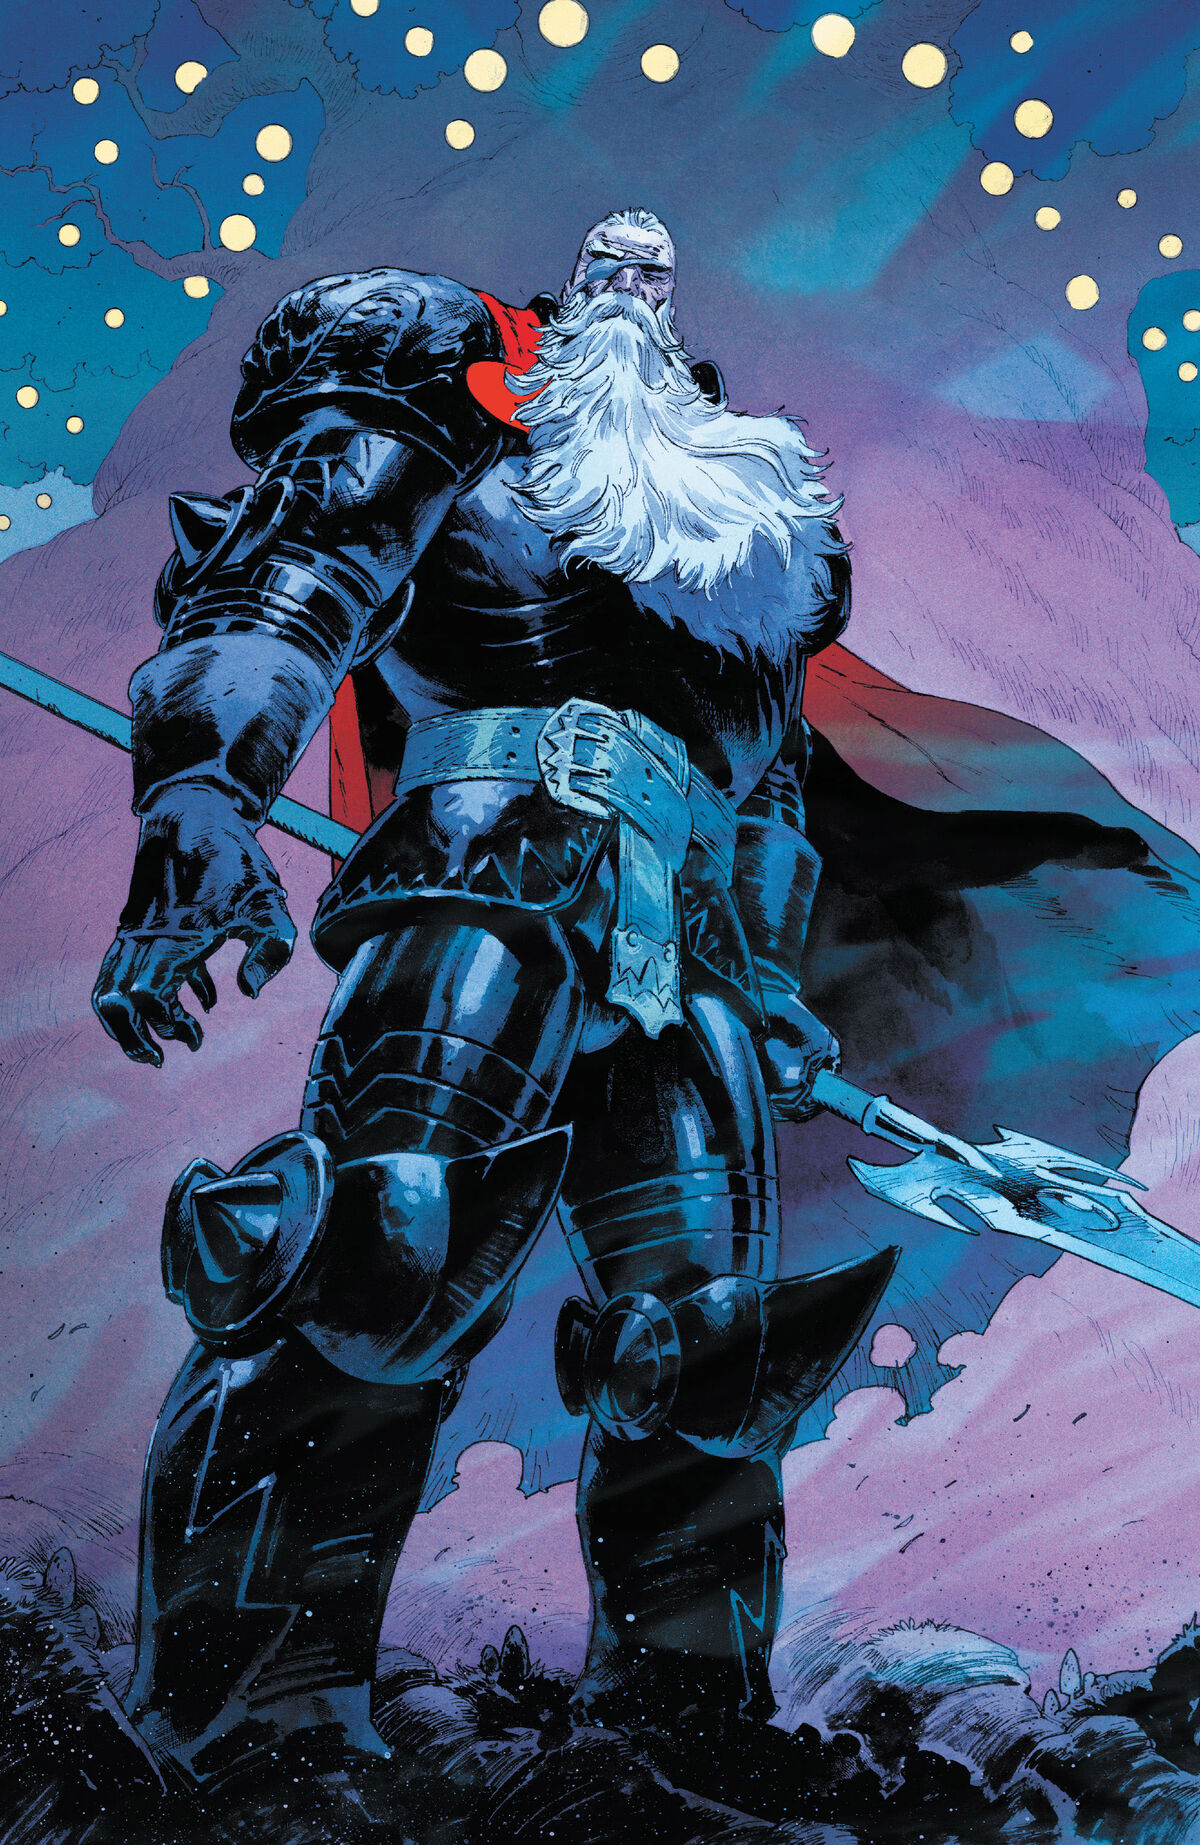 Odin (Marvel Comics) - Wikipedia